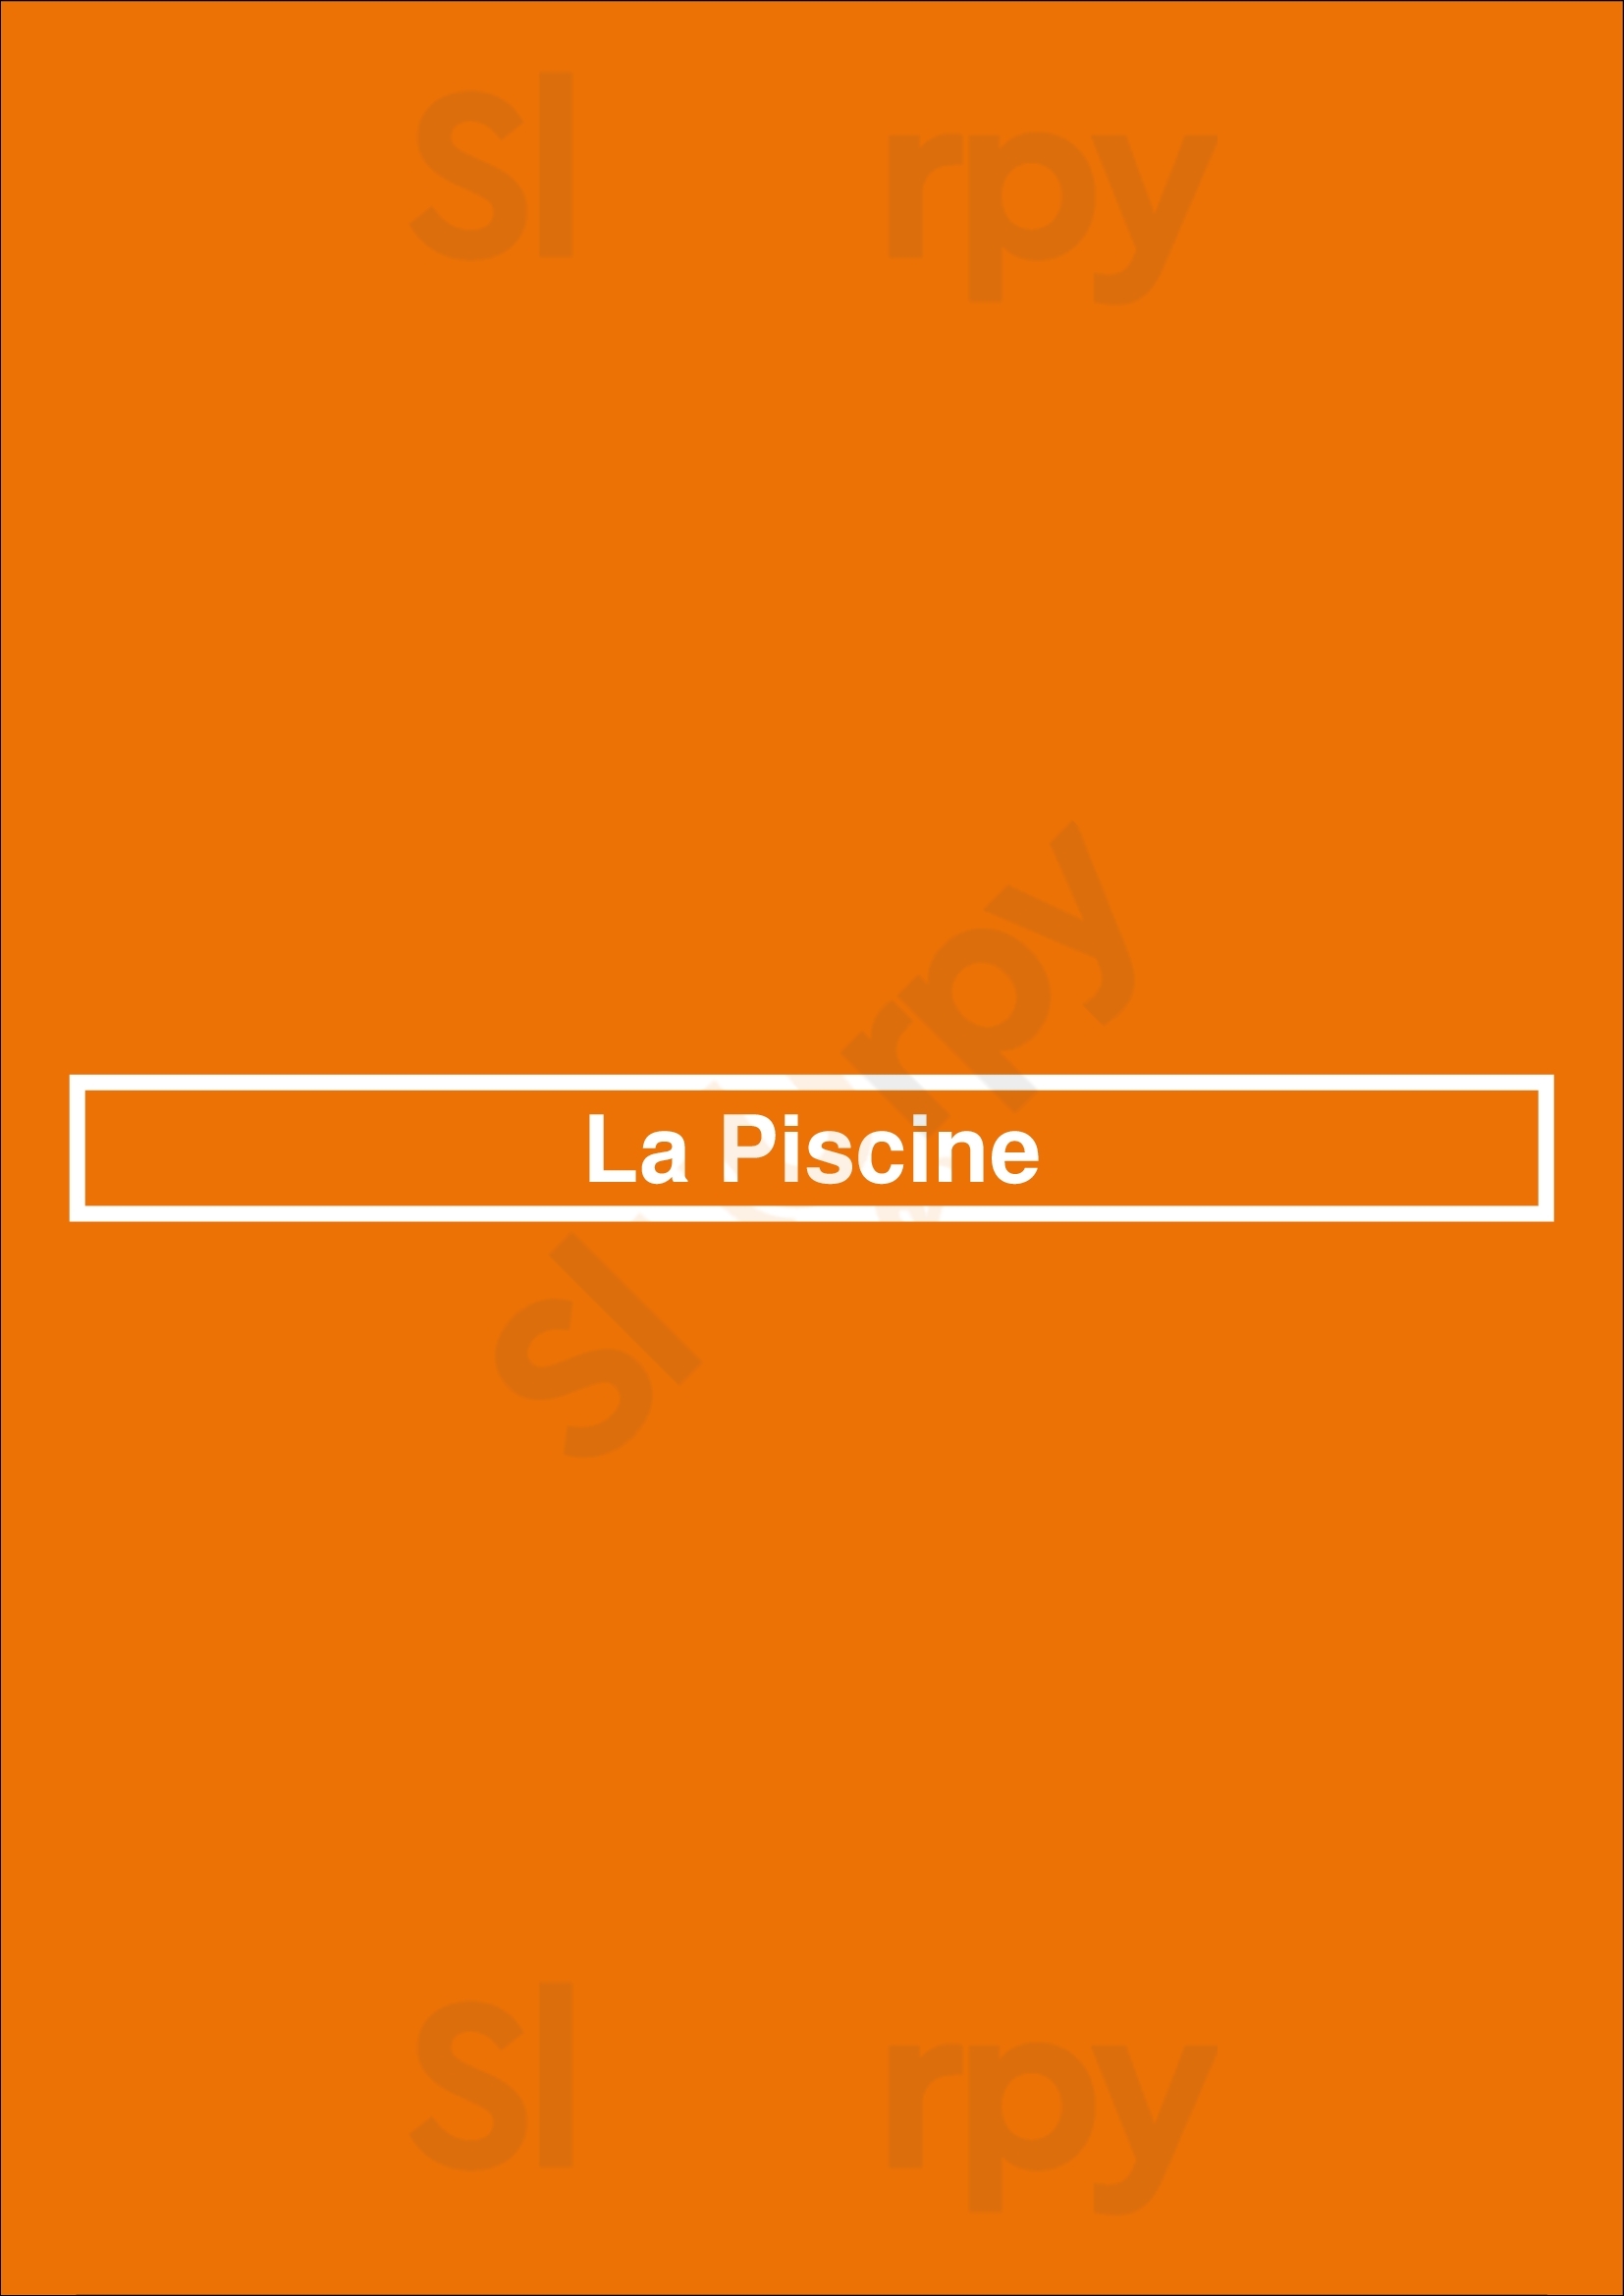 La Piscine Paris Menu - 1